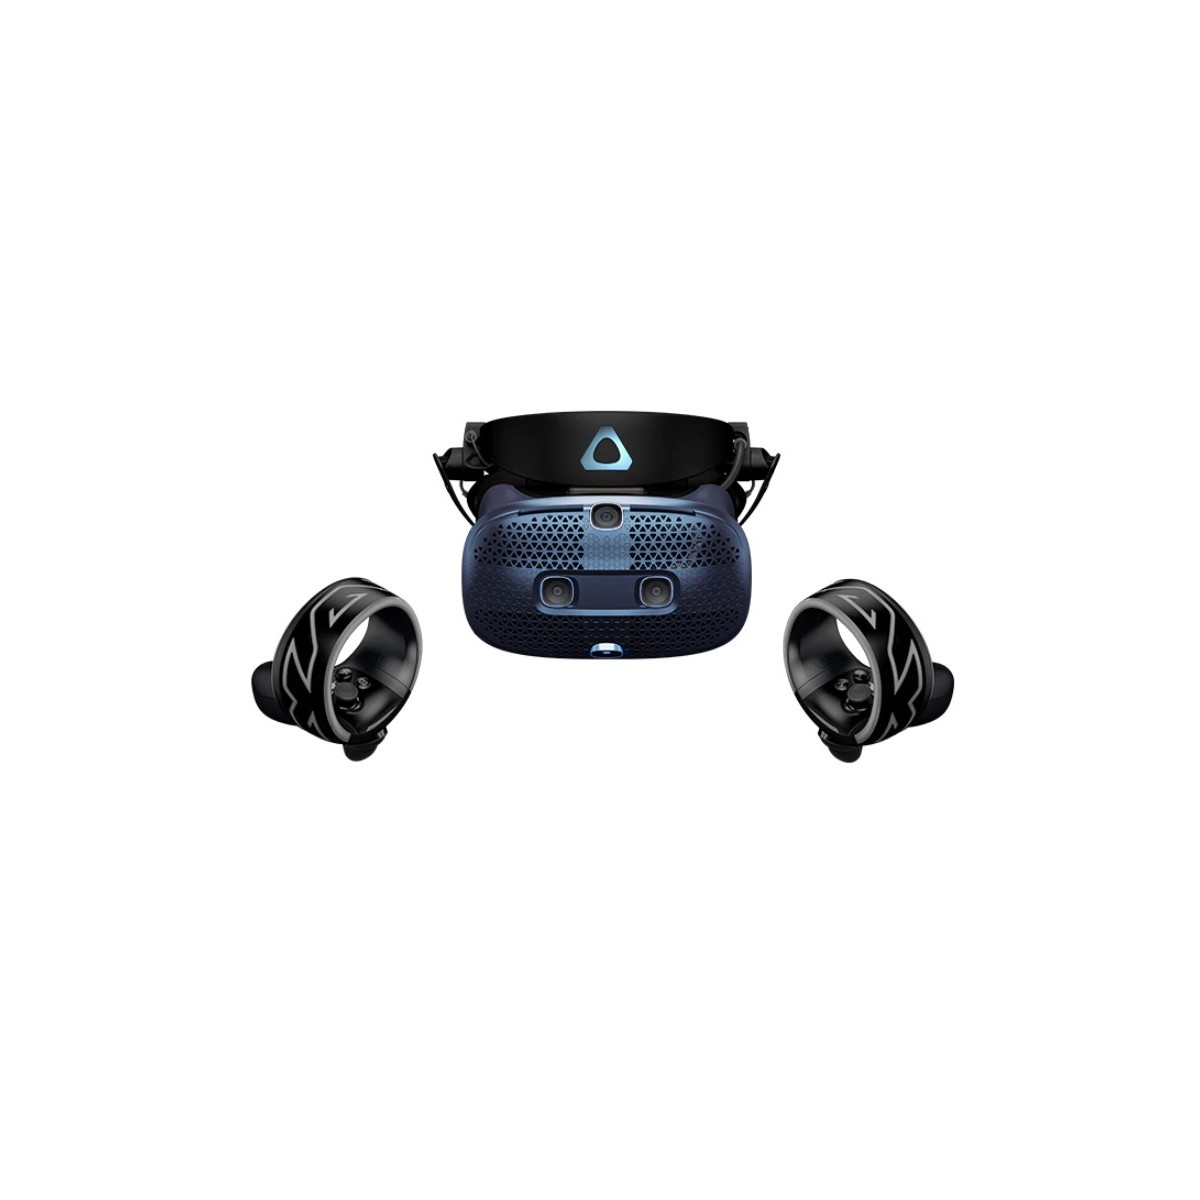 HTC Cosmos - Dedicated head mounted display - Black - Blue - 1440 x 1700 pixels - 90 Hz - 110° - USB Type-C